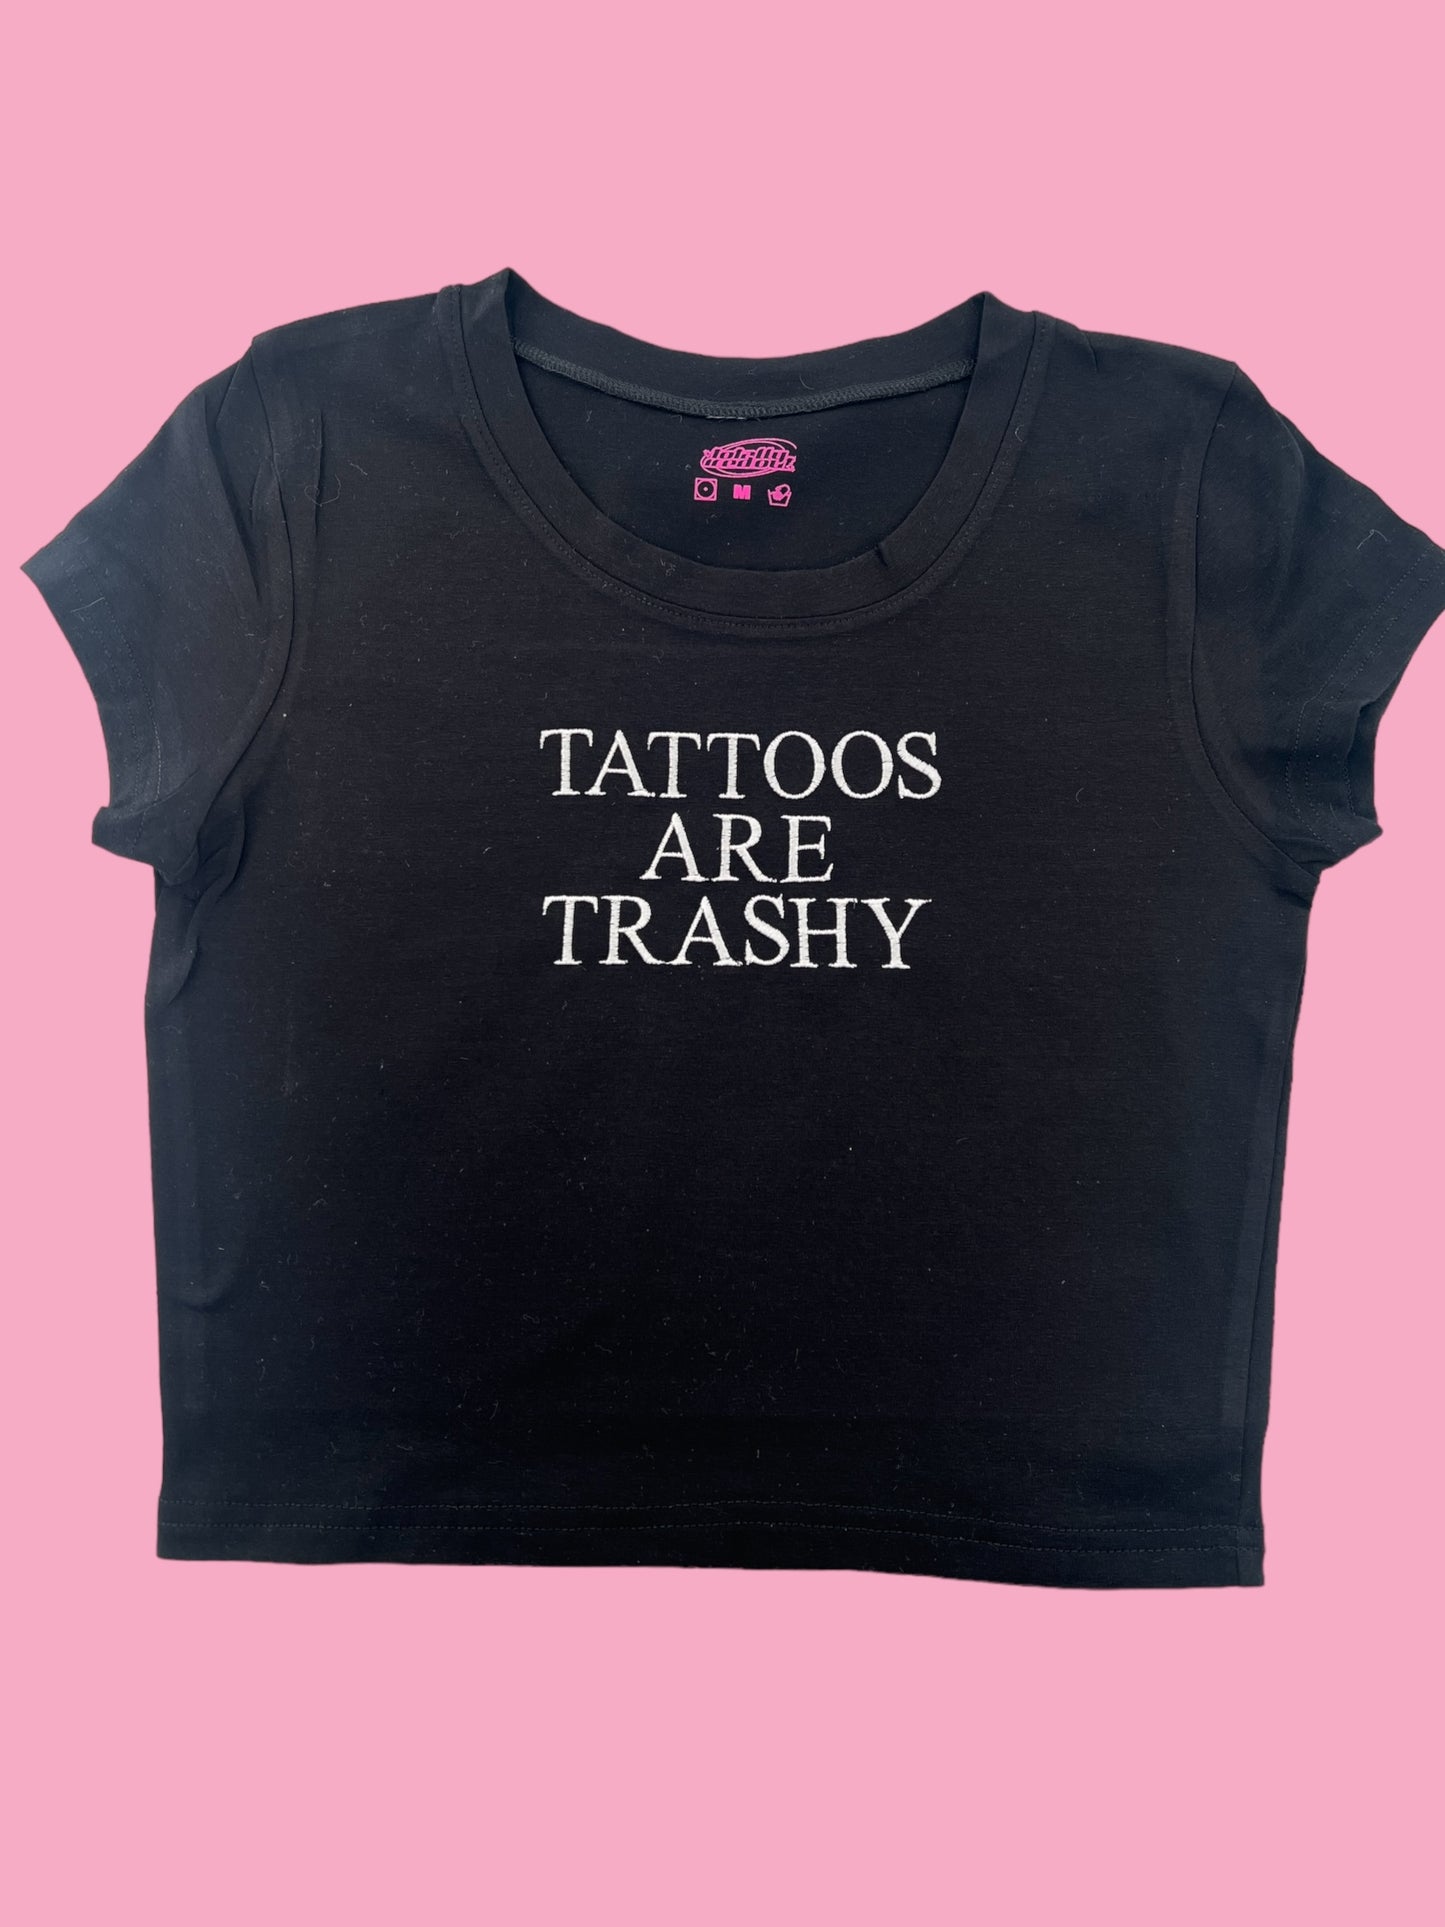 a black shirt that says tattoos are trashy